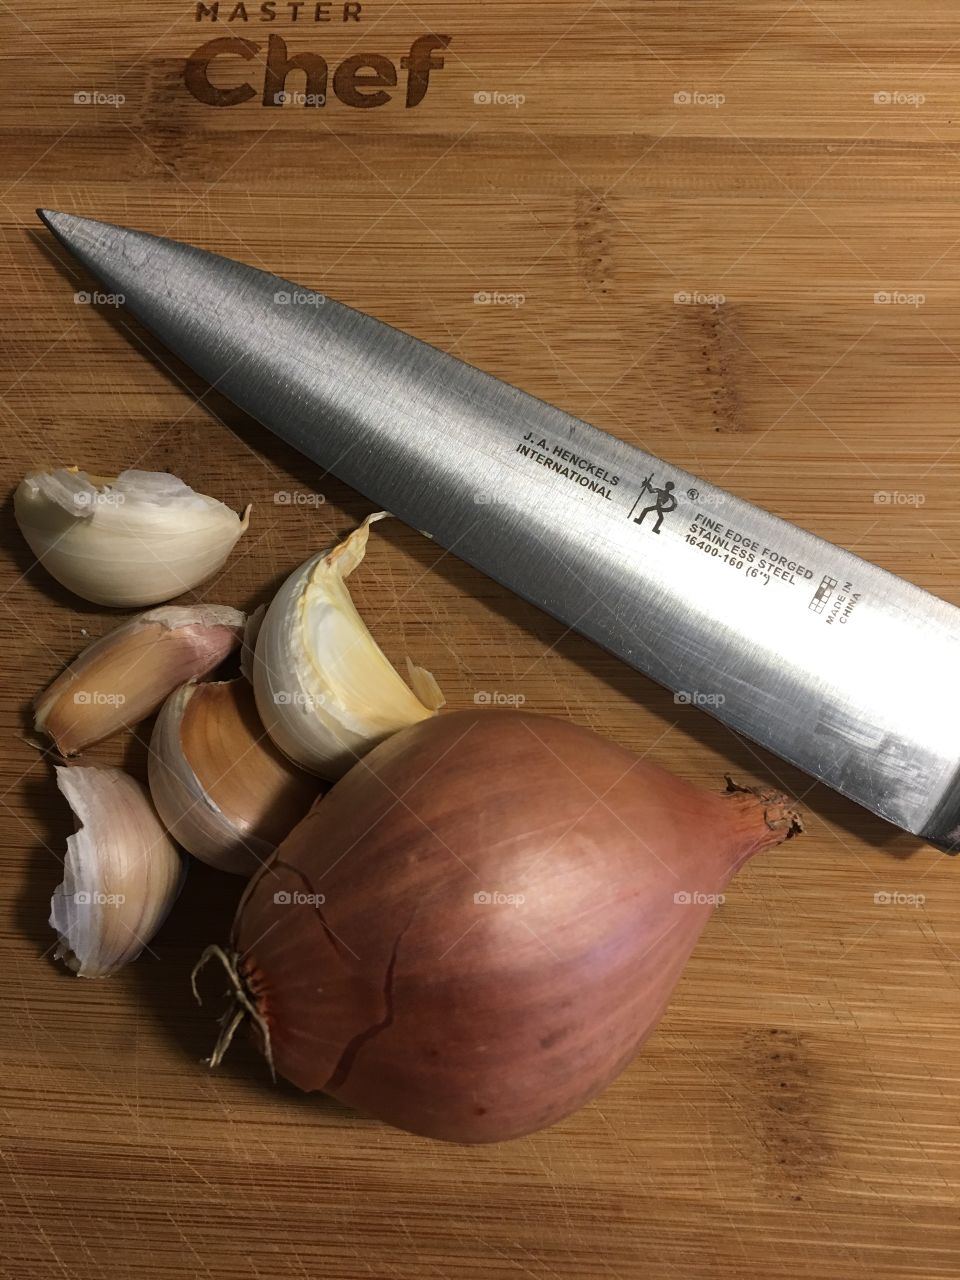 Garlic cloves and a shallot